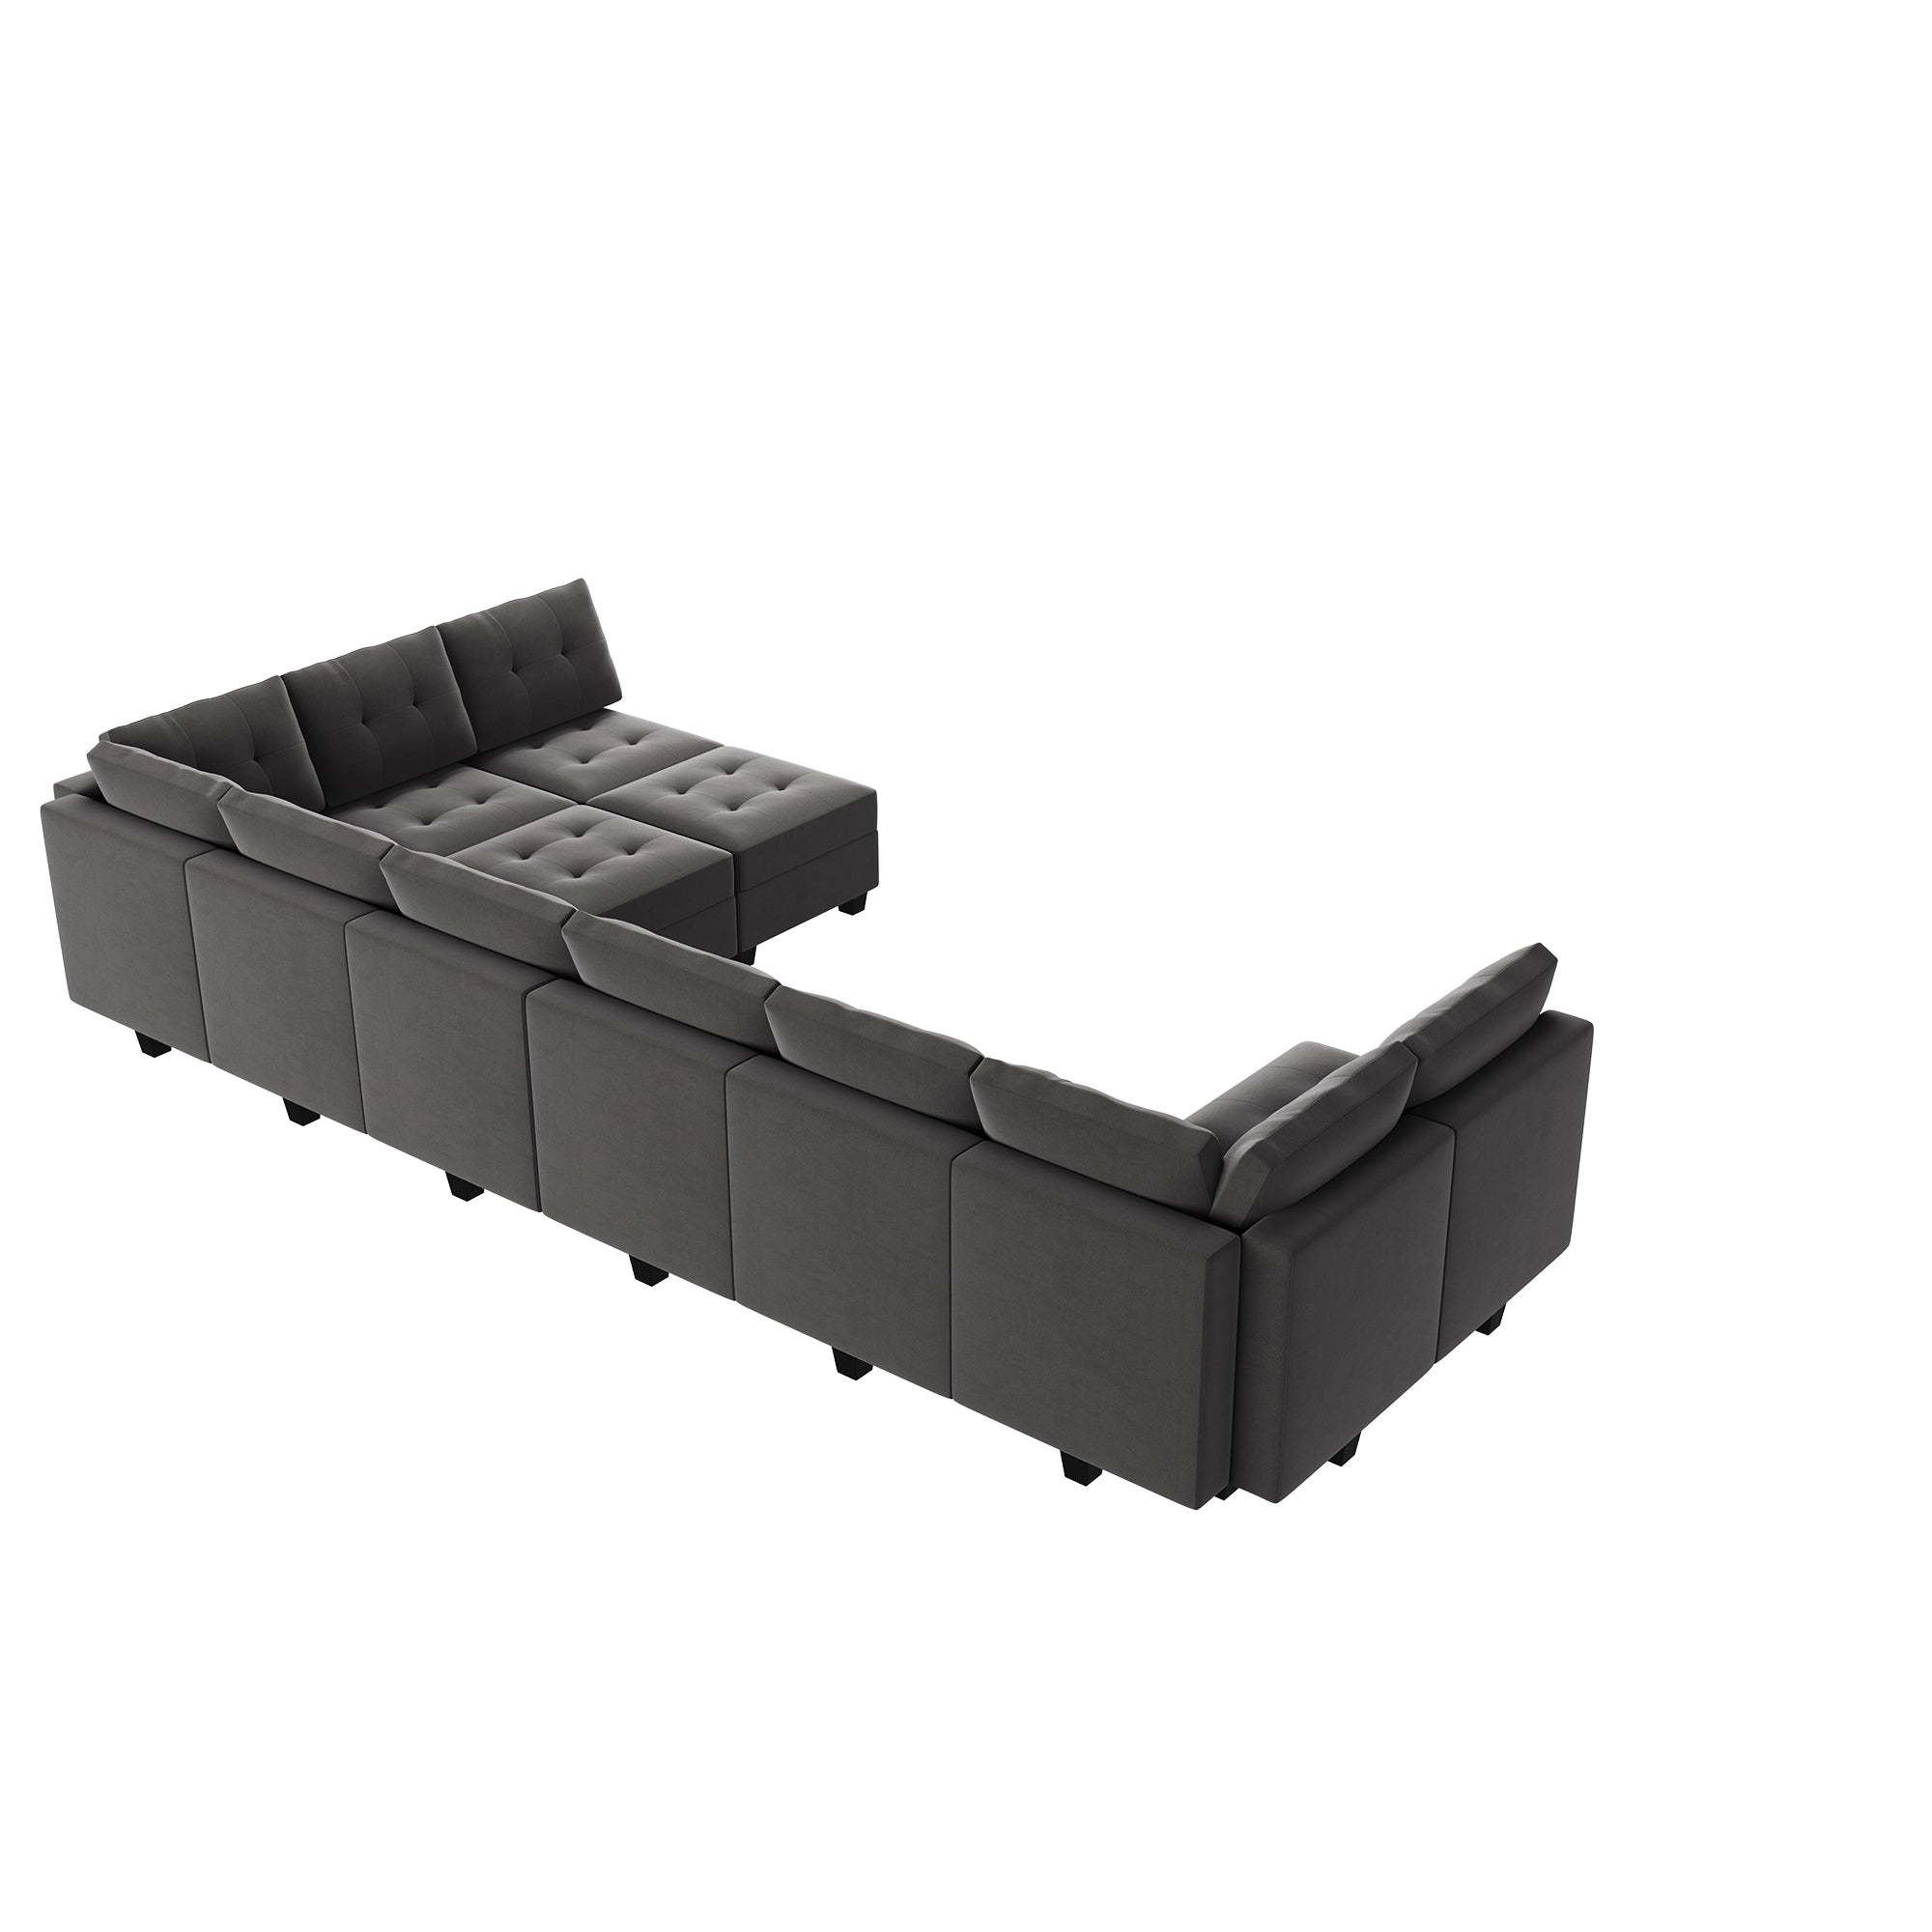 HONBAY 11-Piece Velvet Modular Sleeper Sectional With Storage Seat